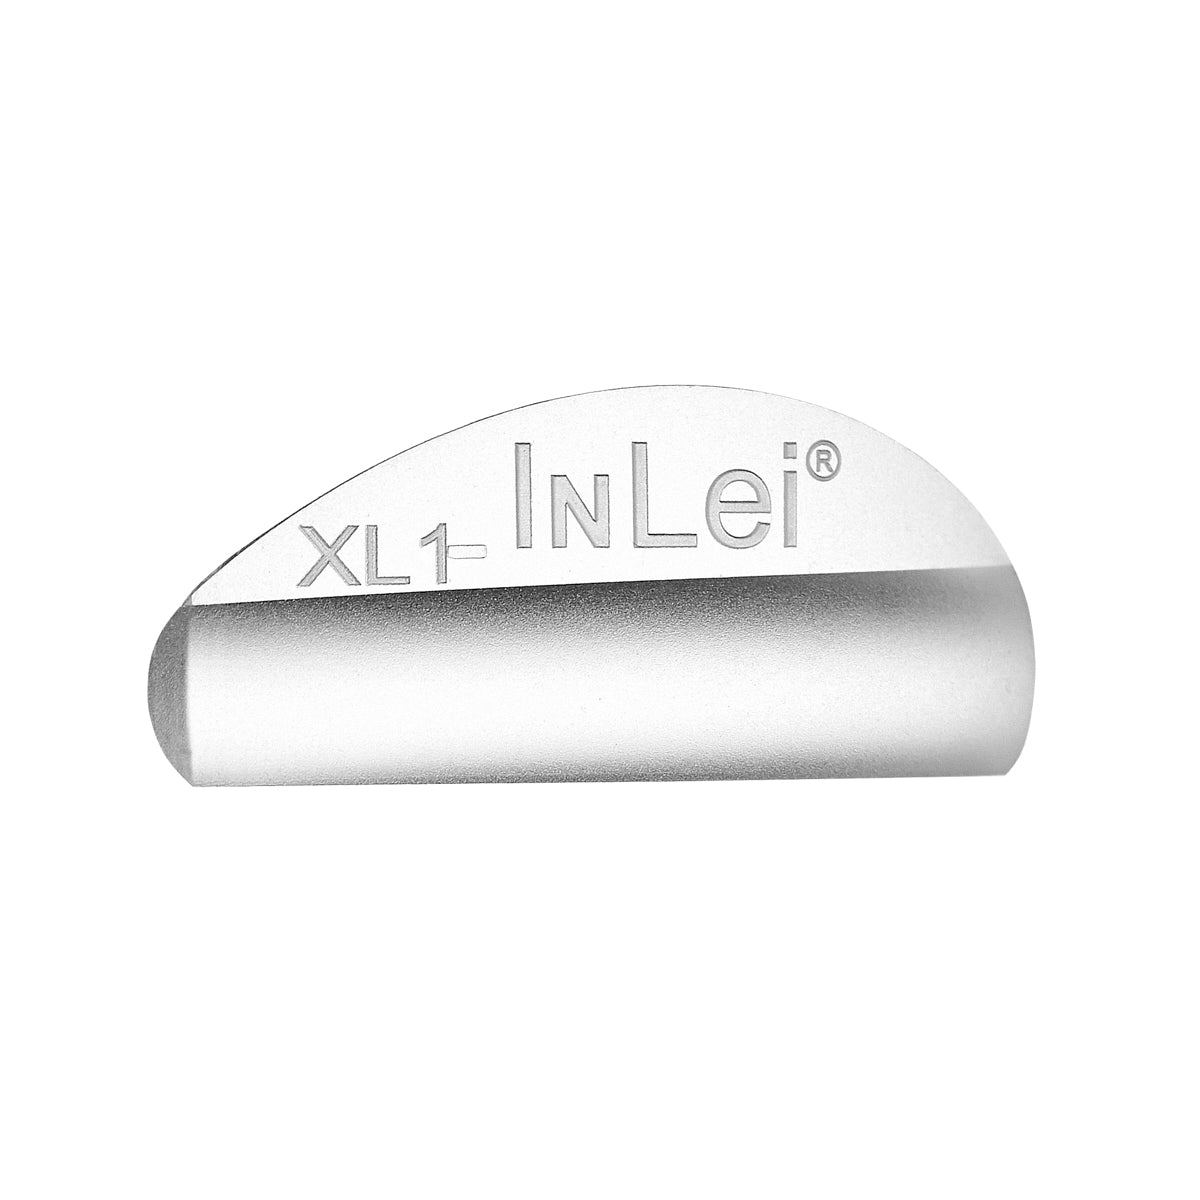 InLei® “ONE” - Silicone Shields XL1